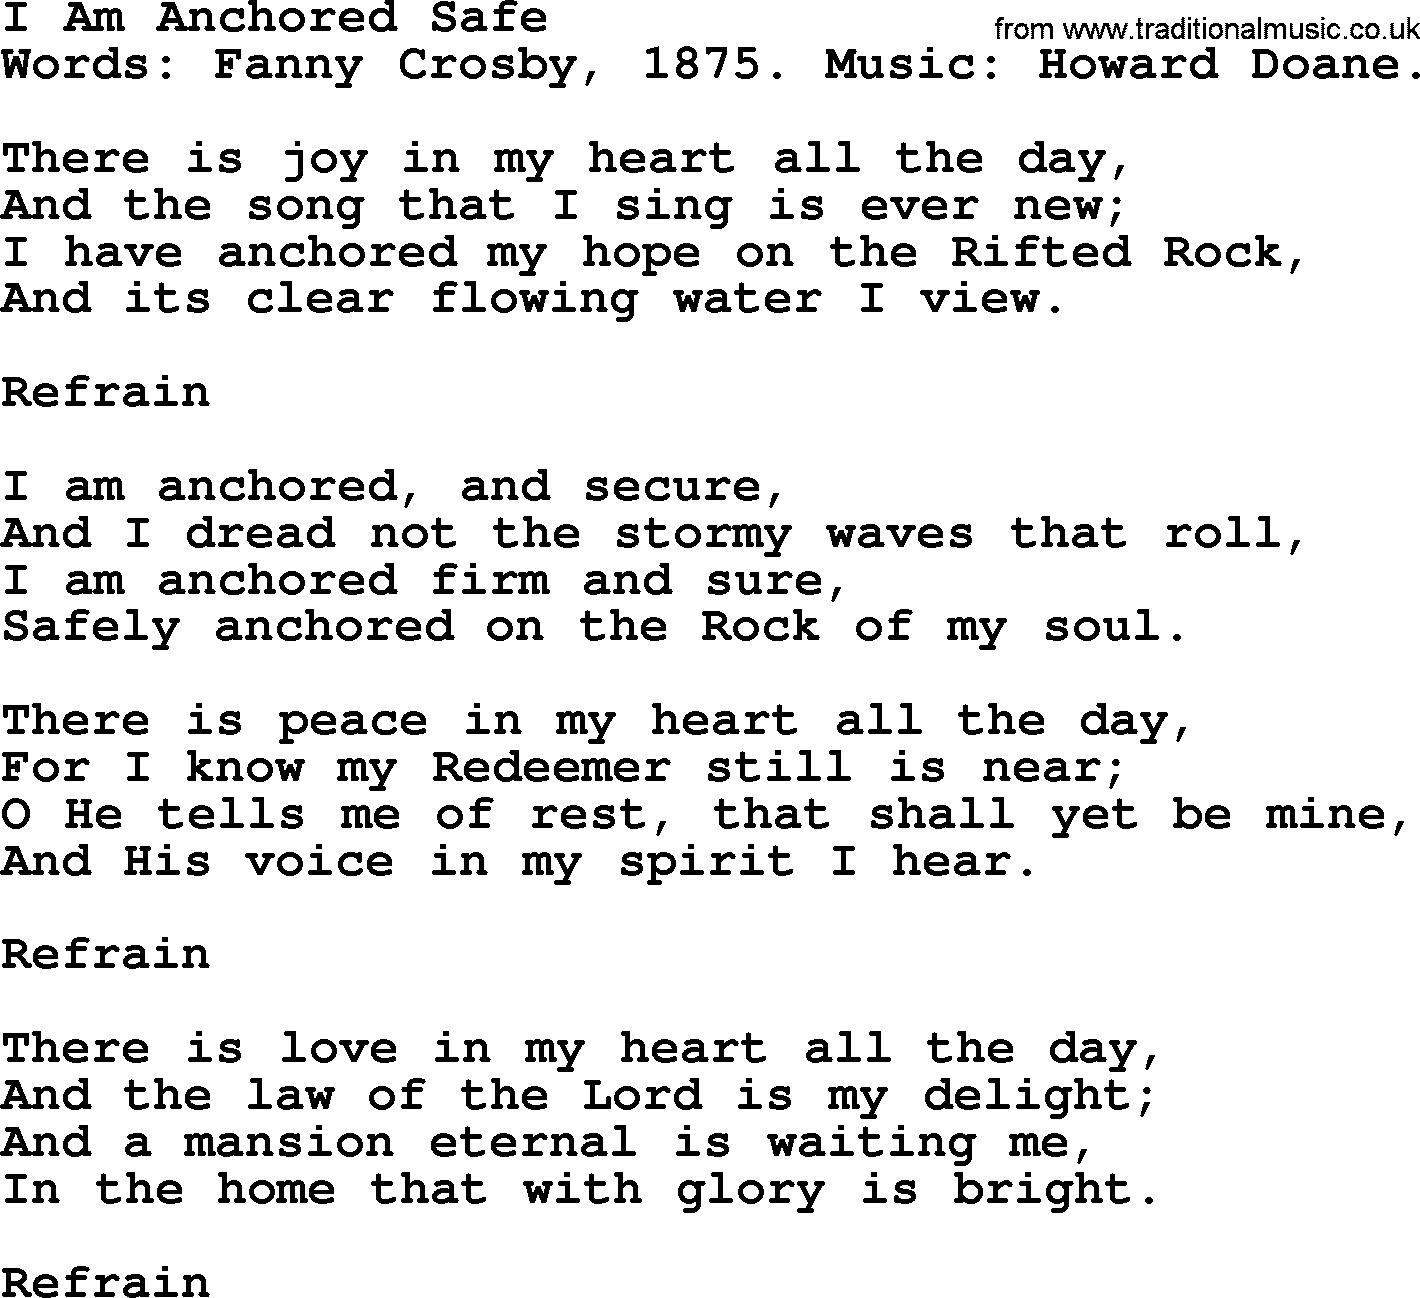 Fanny Crosby song: I Am Anchored Safe, lyrics